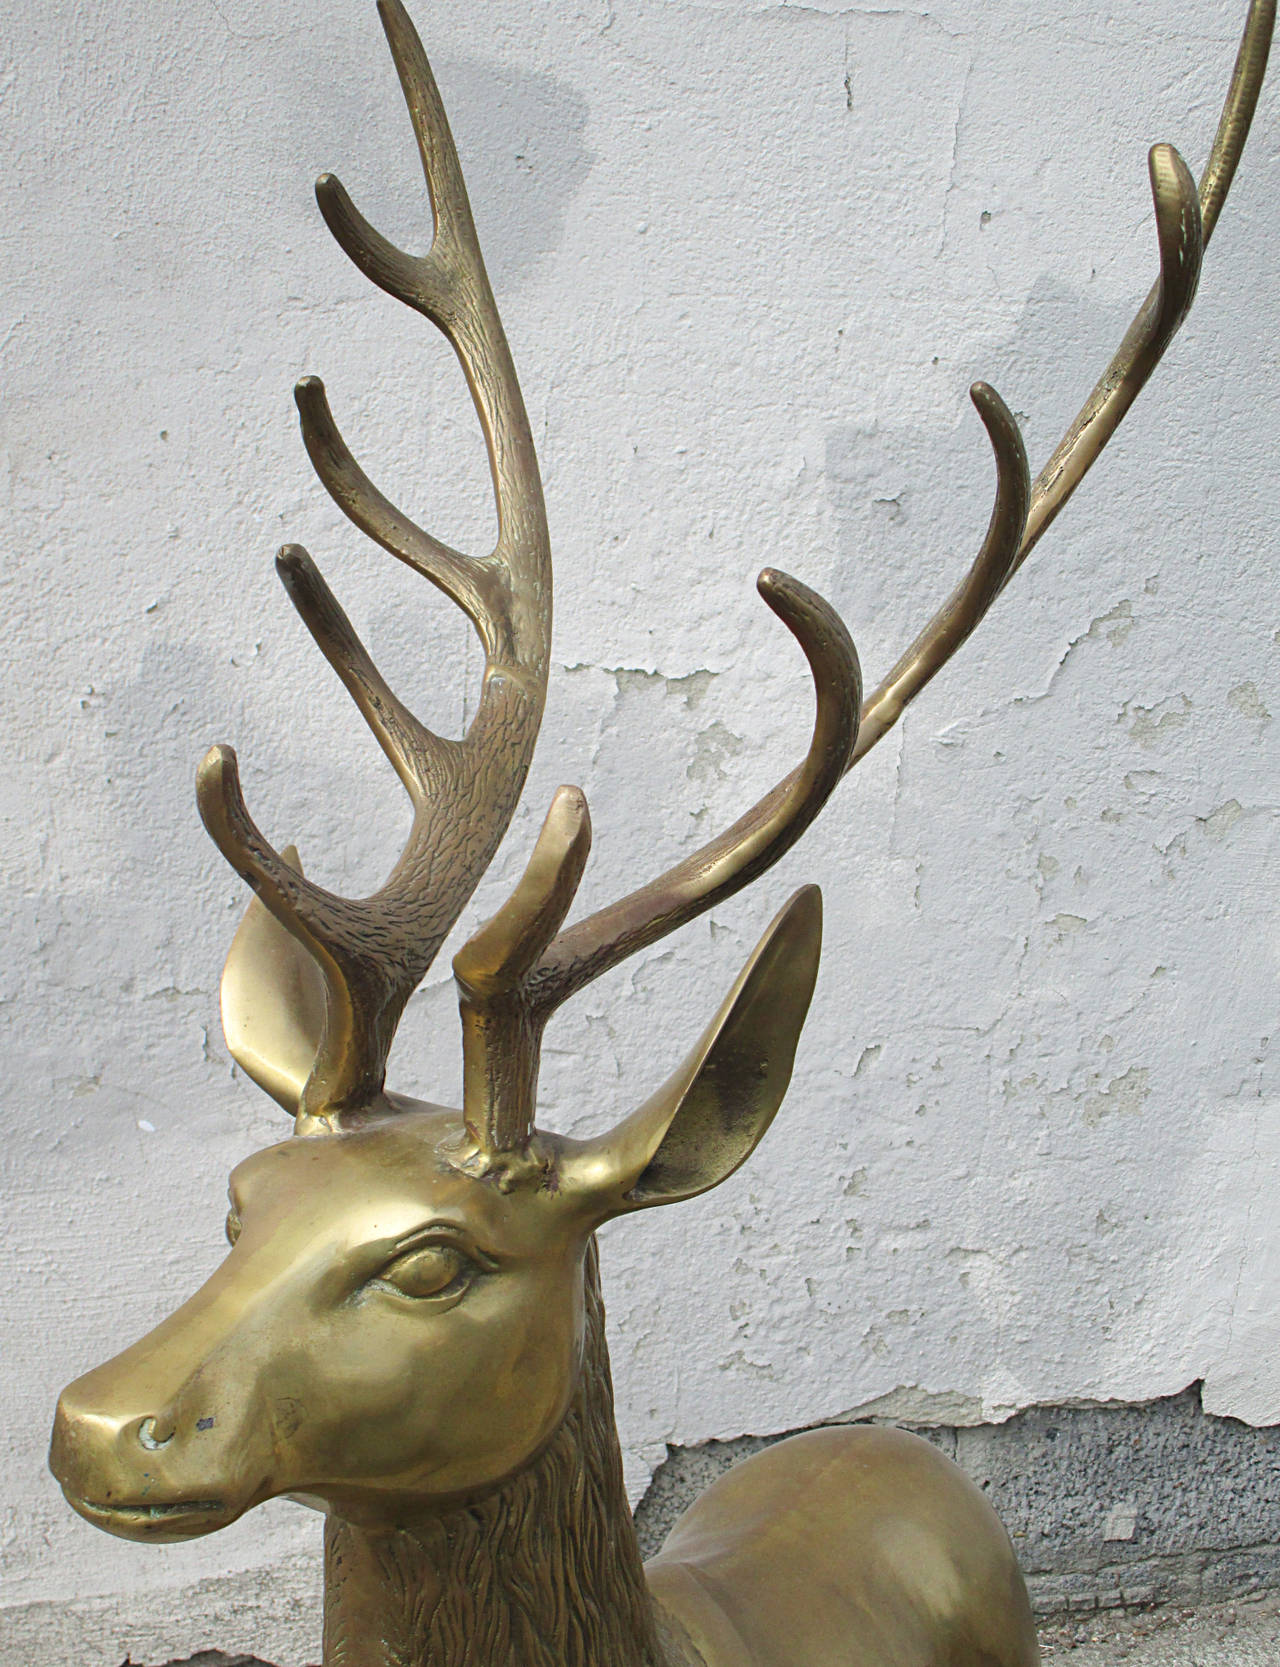 elk statue for sale